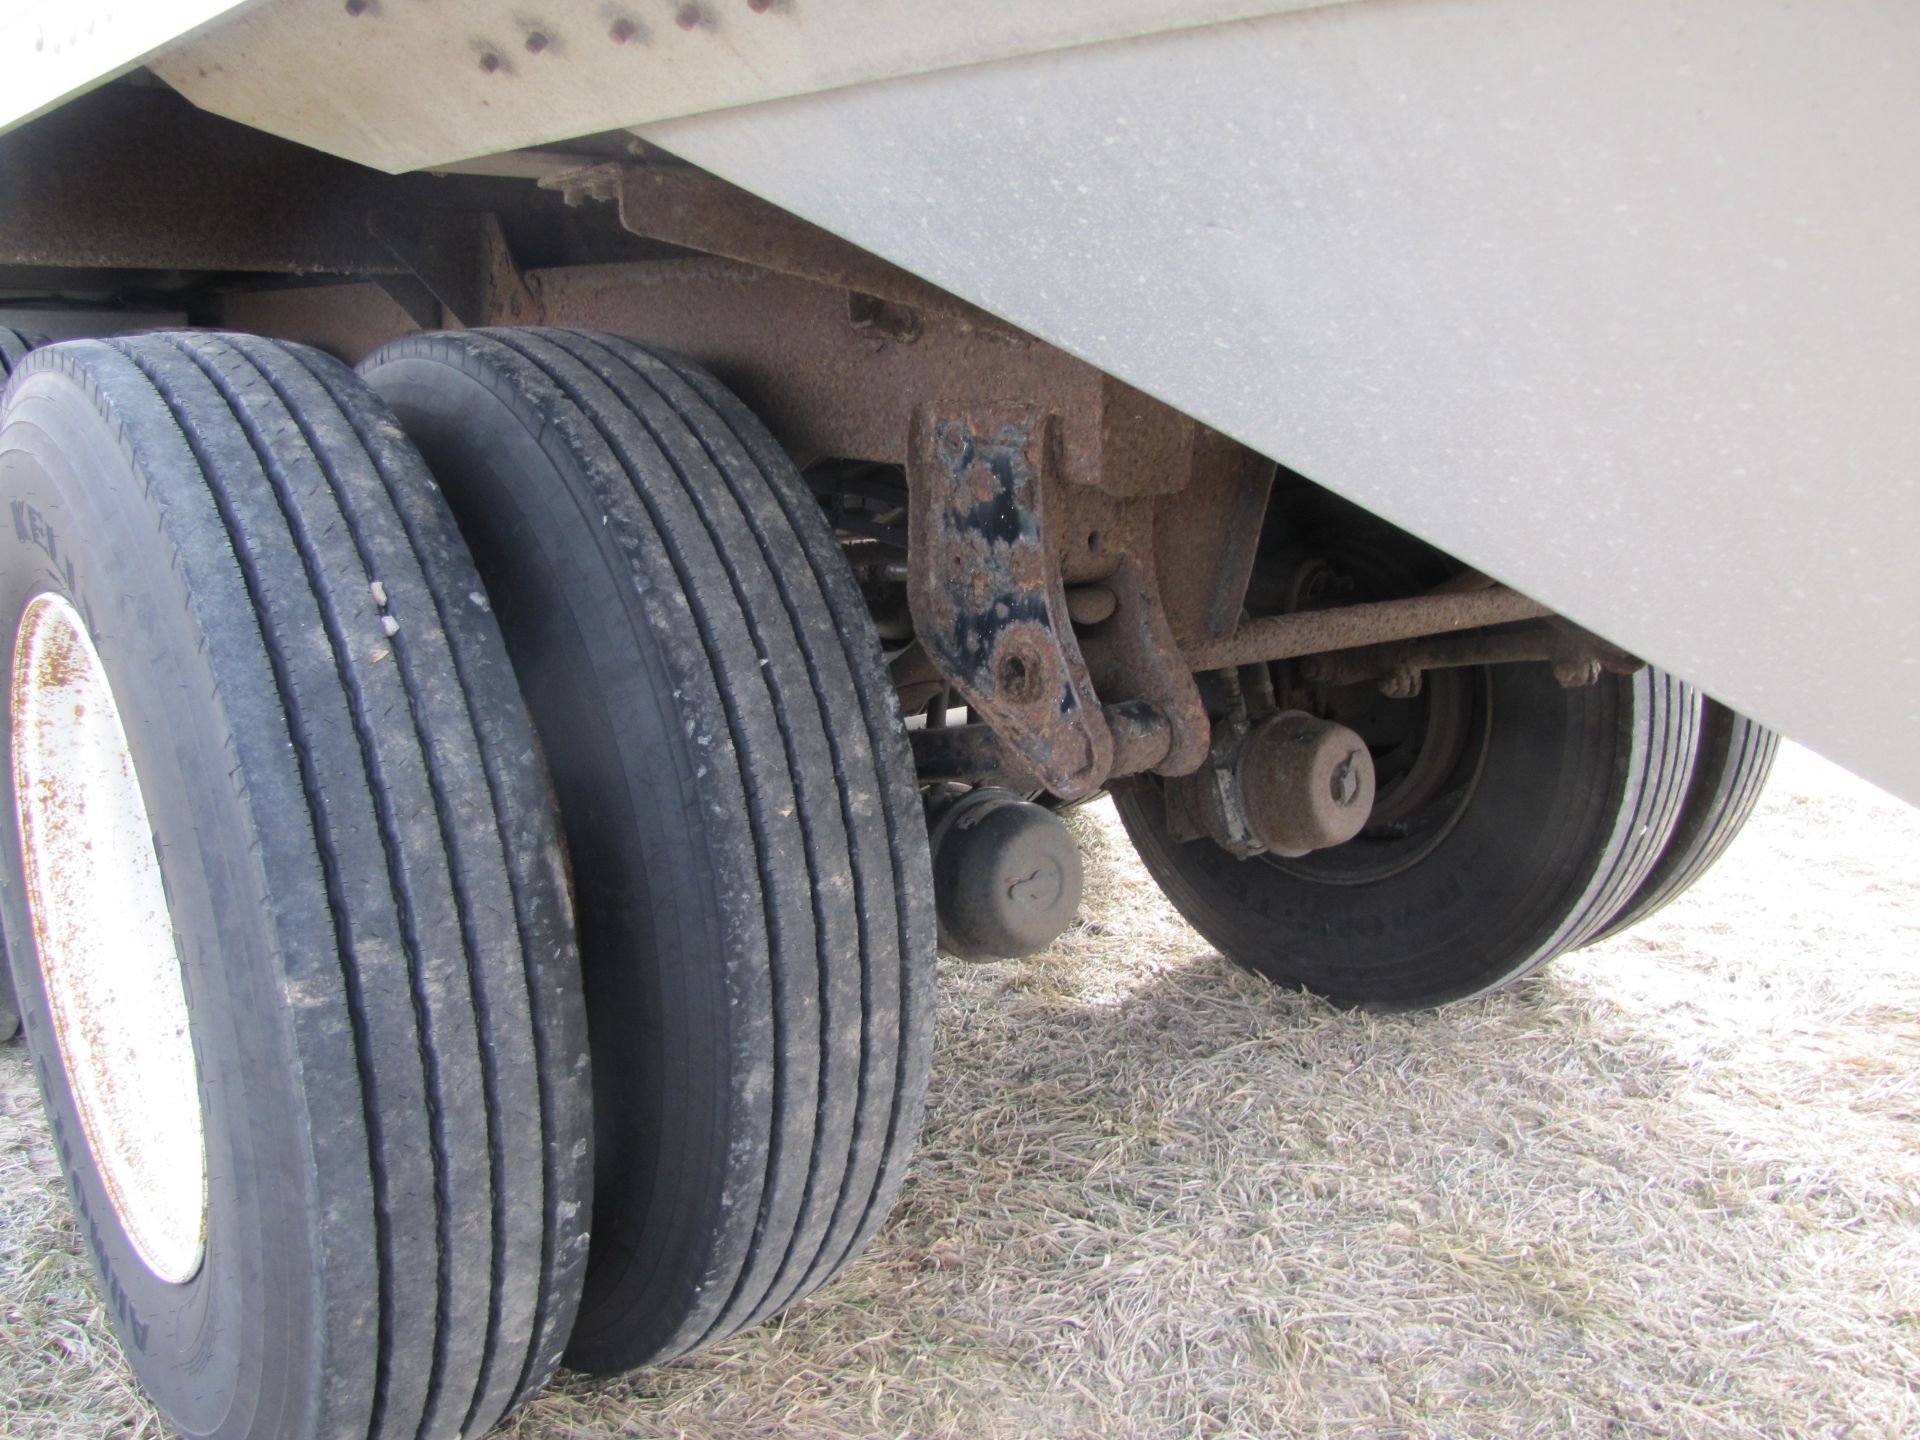 34’ 2006 Timpte hopper bottom, 11R24.5L tires, roll tarp, VIN 1TDH335206B108993 - Image 20 of 34